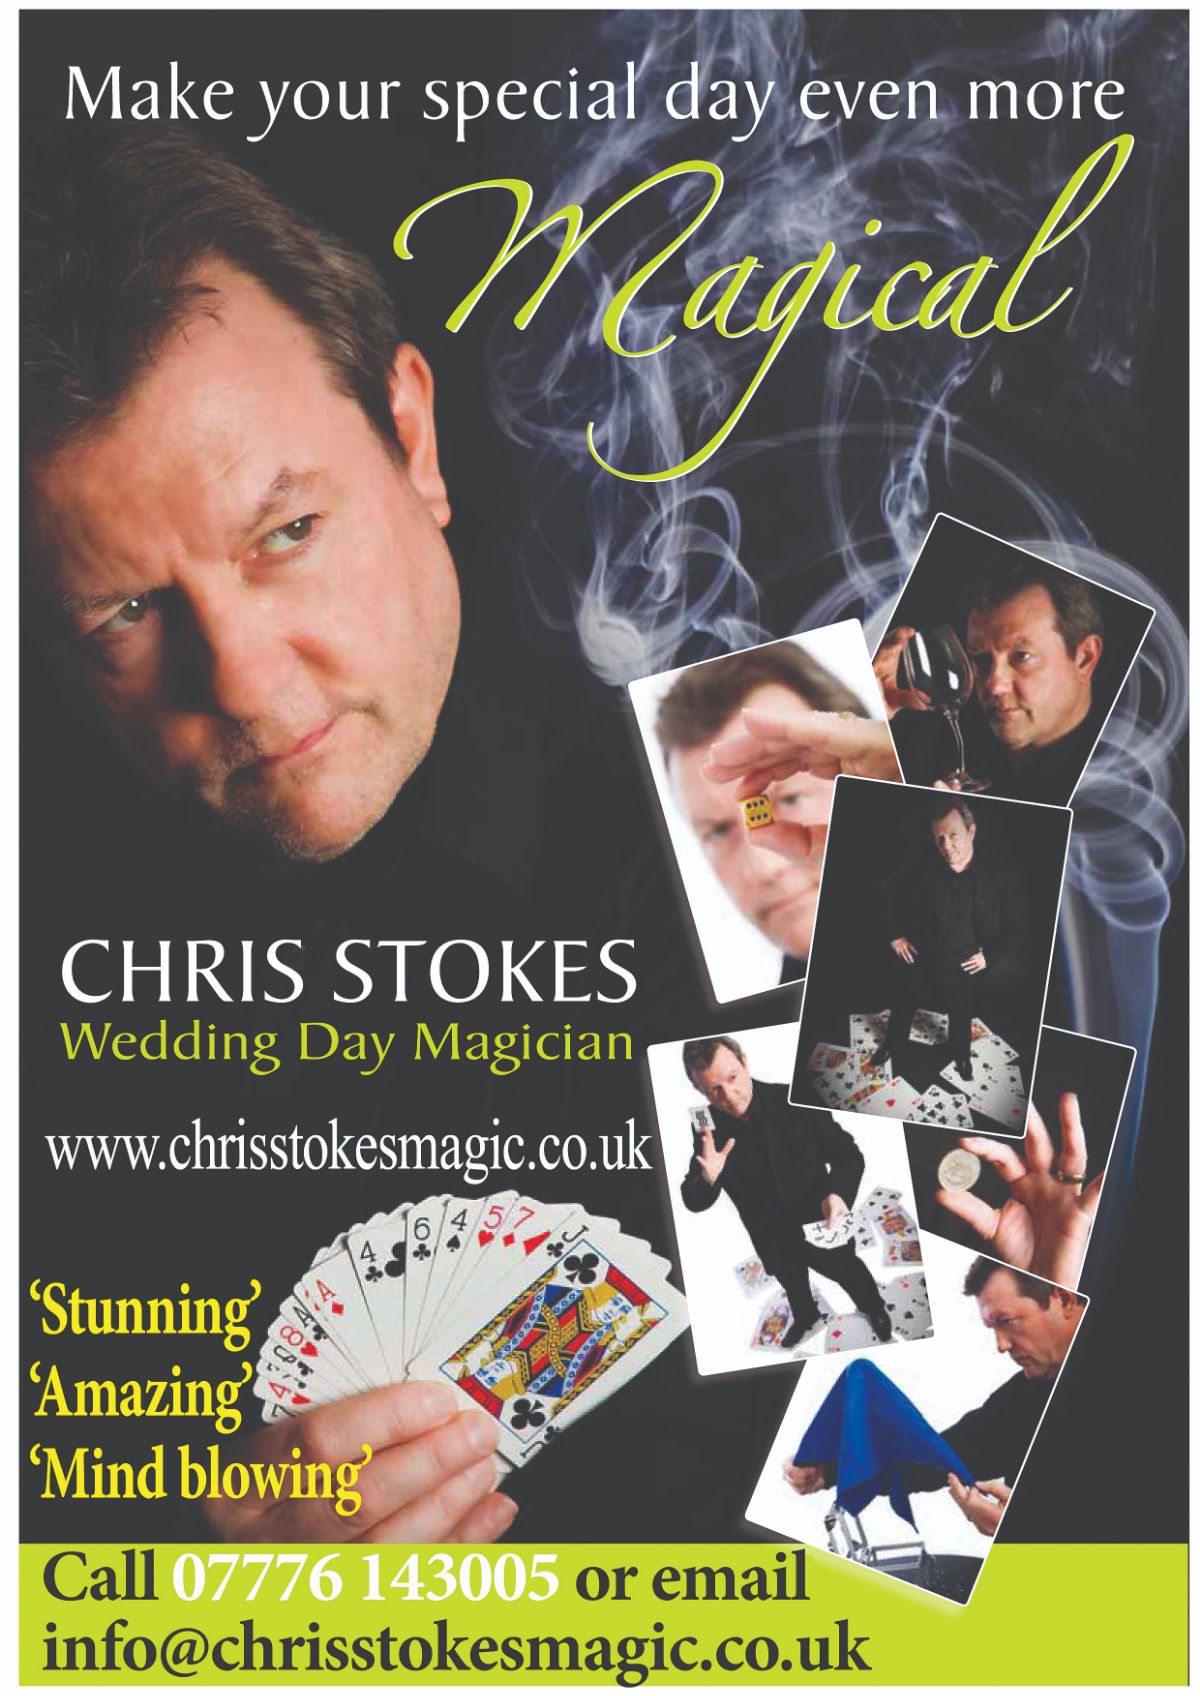 Chris Stokes Magic -Image-2